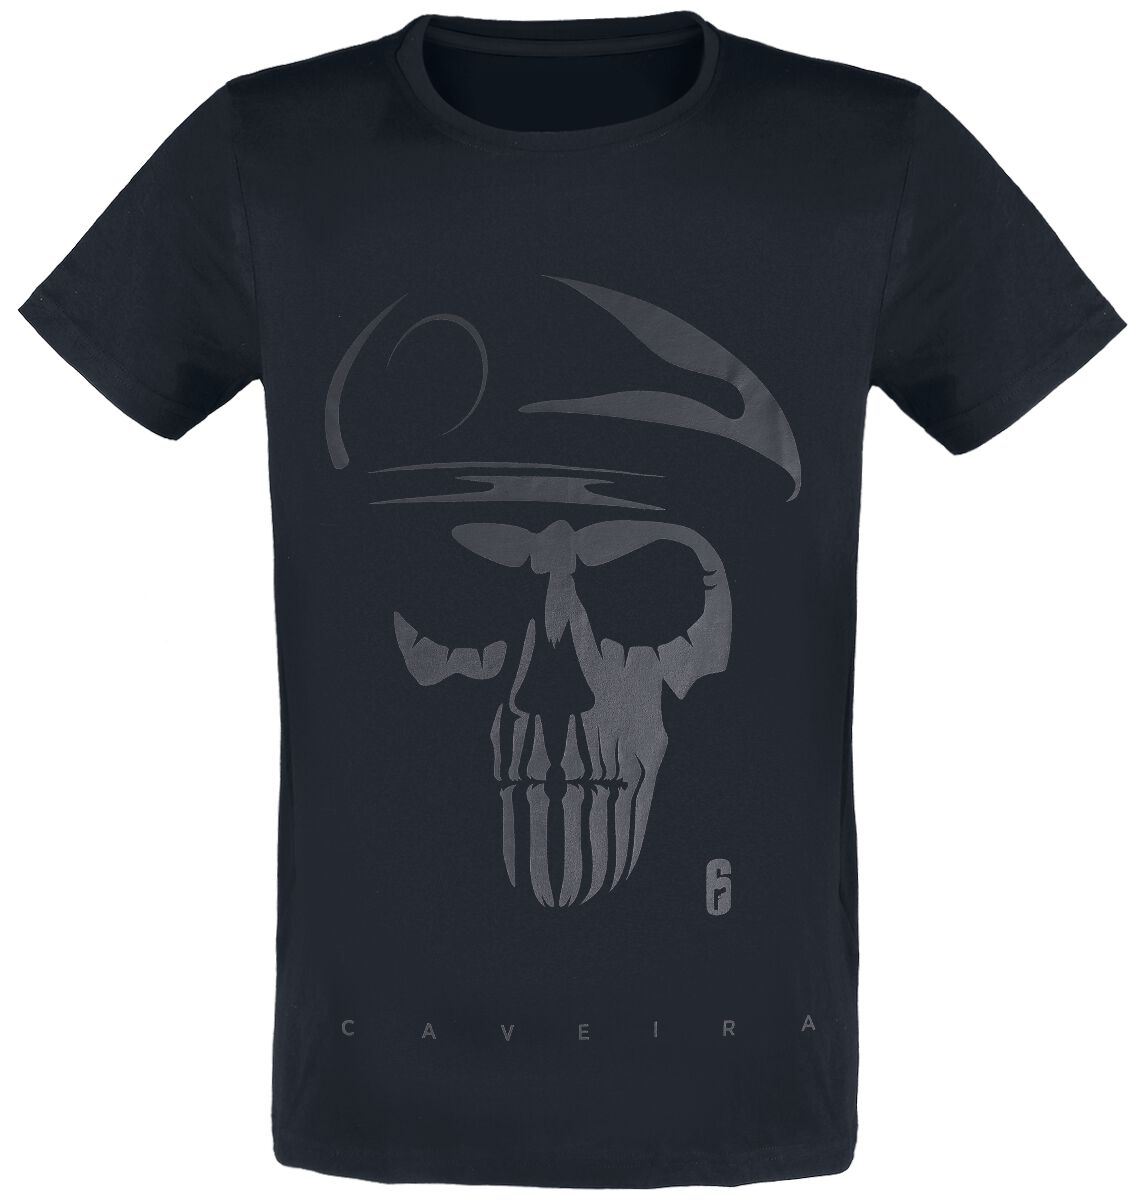 Six Siege Caveira T-Shirt black